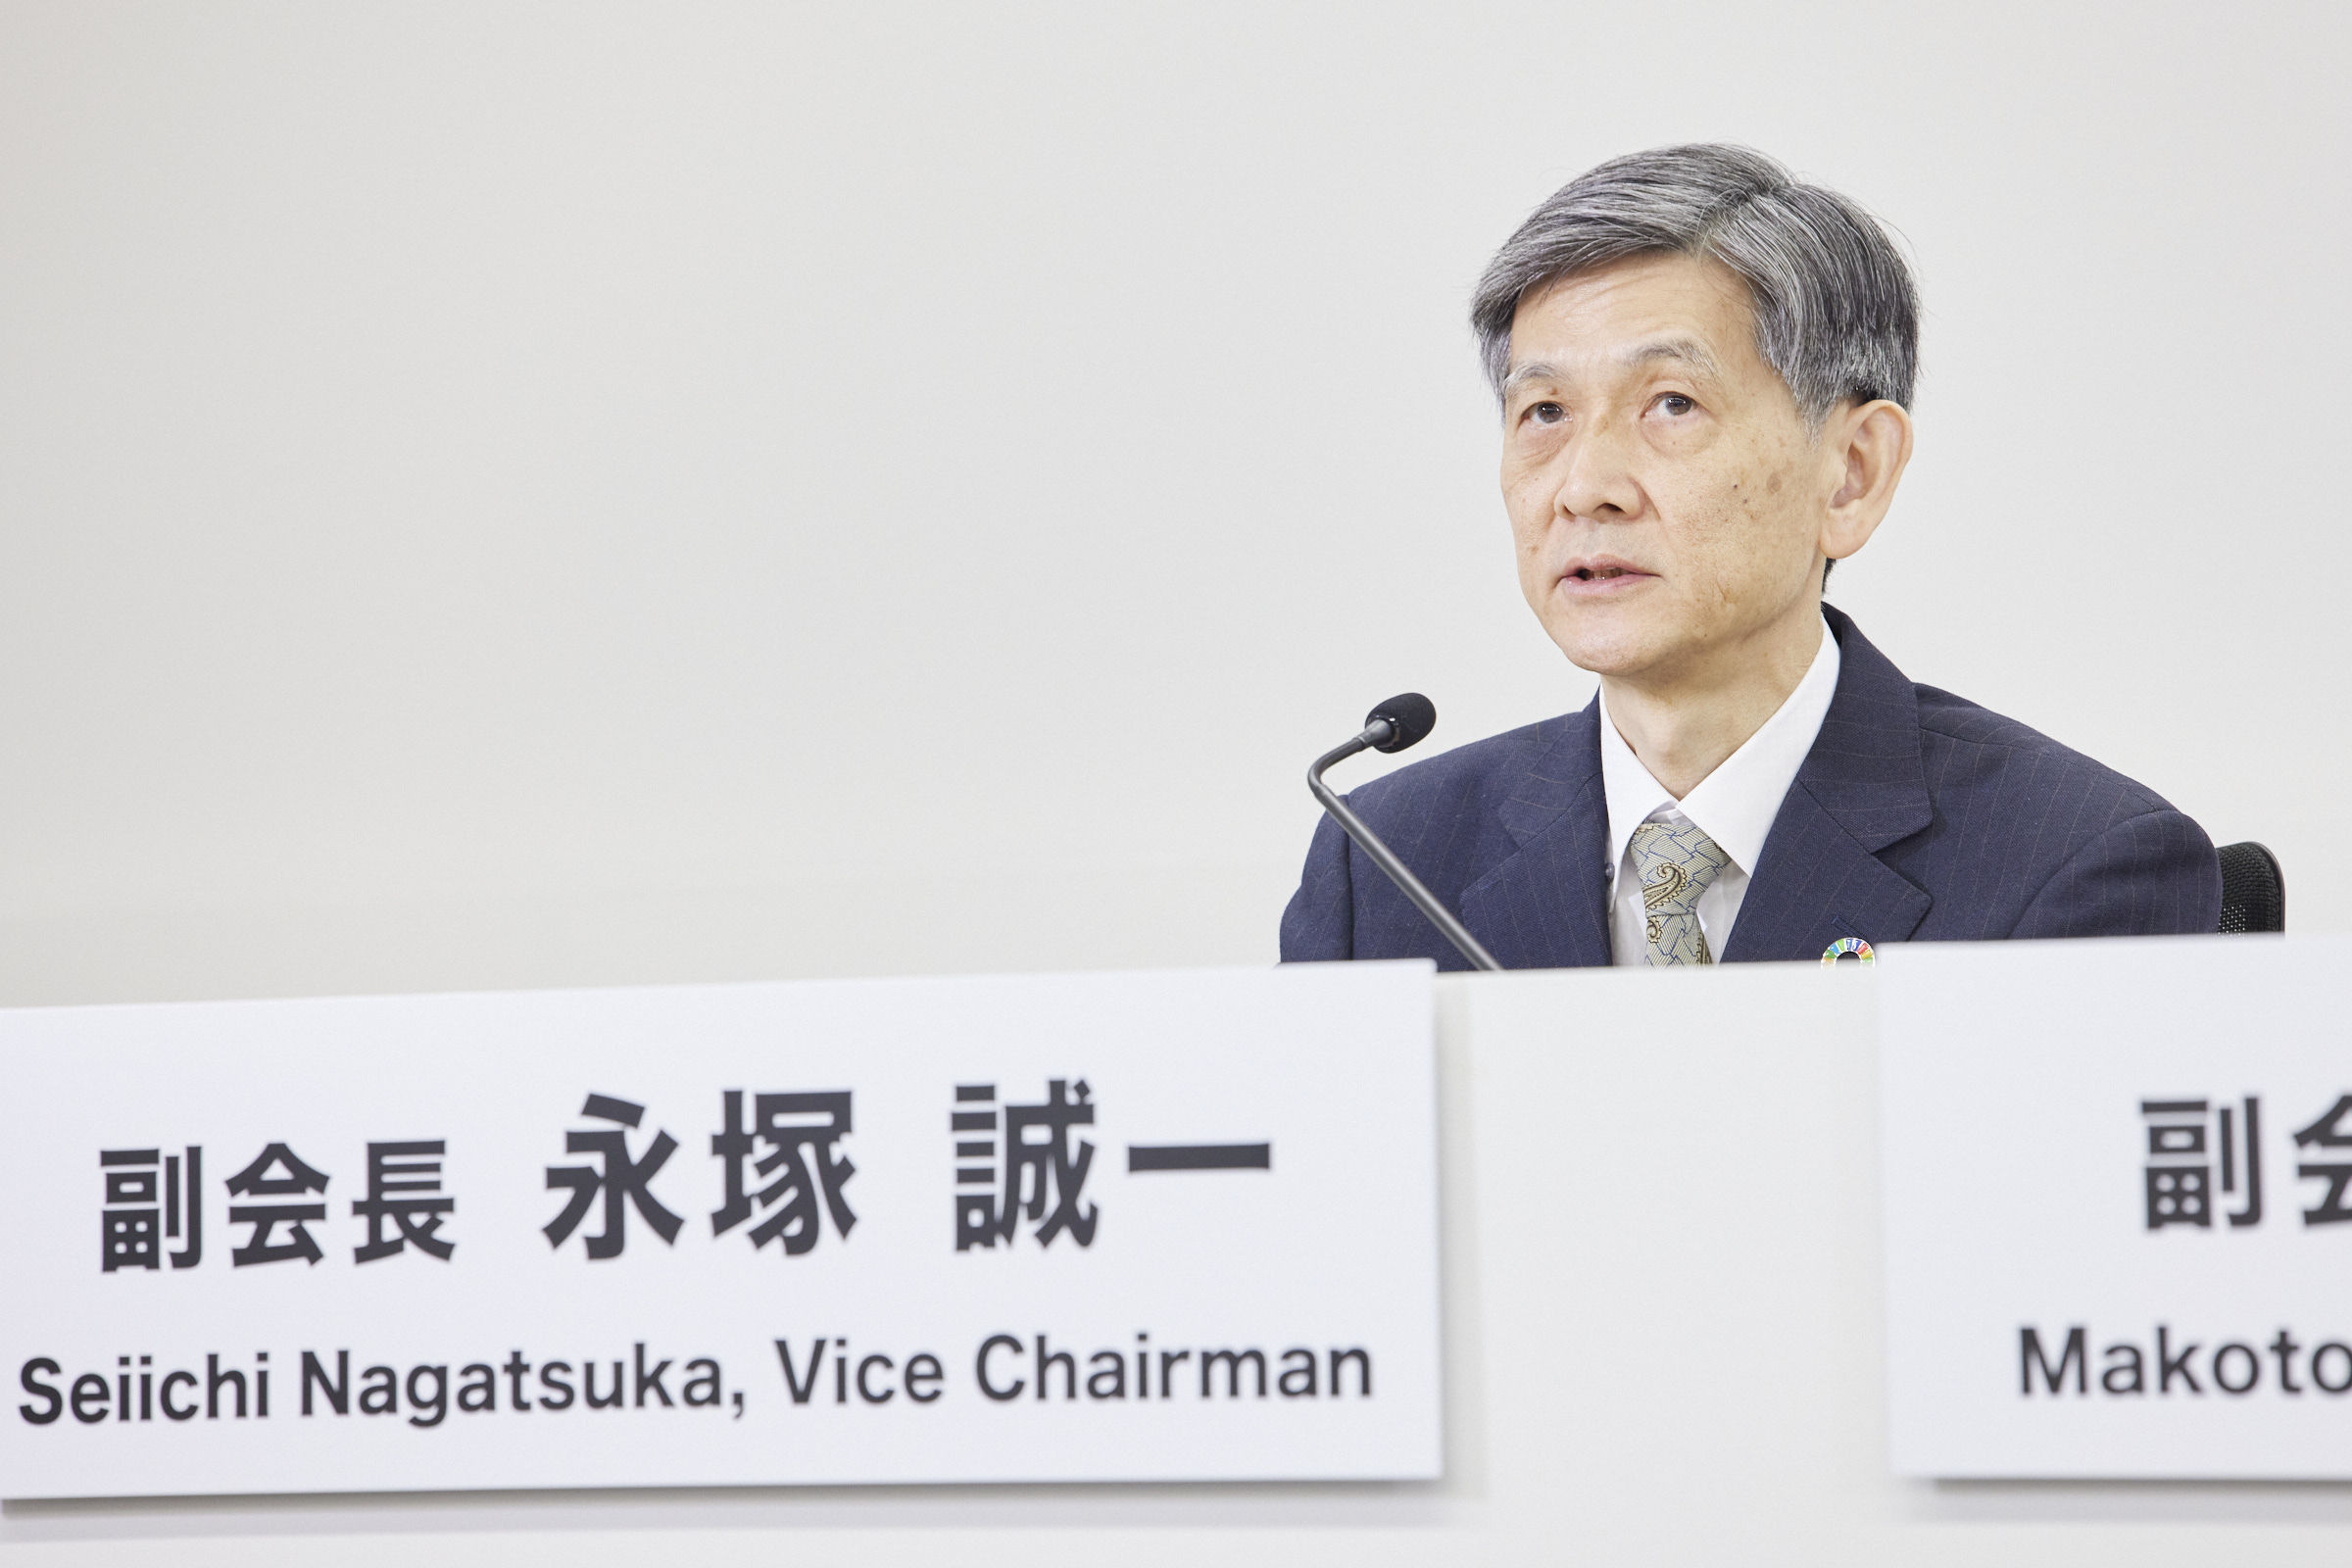 NAGATSUKA Seiichi, Vice Chairman (President, JAMA)